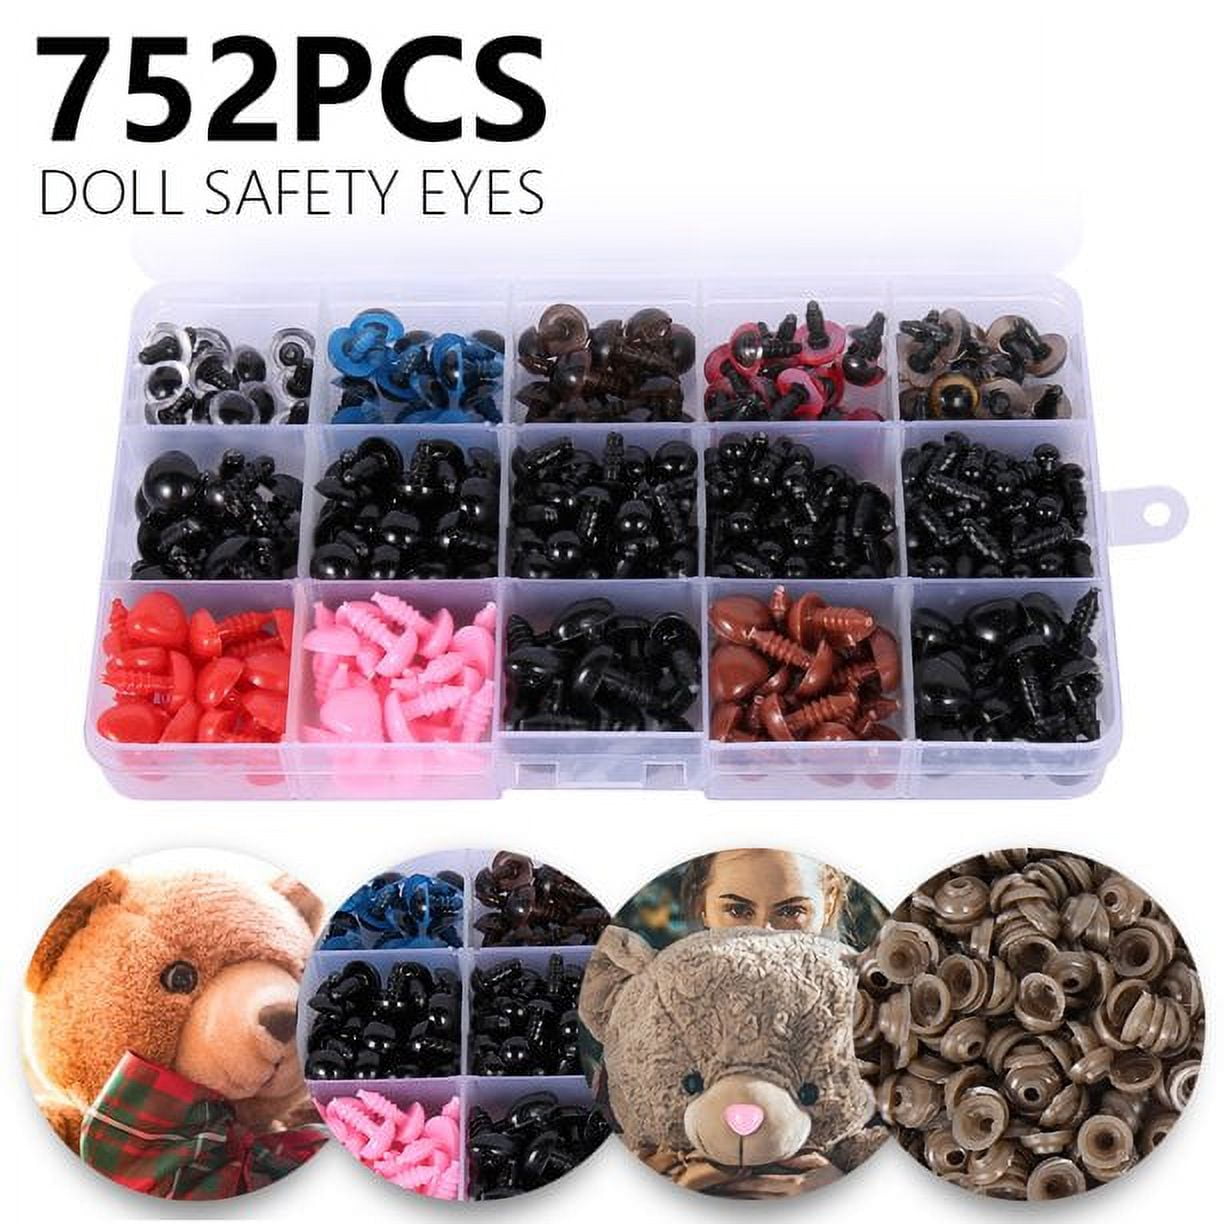 MTFun 500pcs Plastic Safety Eyes and Noses, Craft Doll Eyes, Black